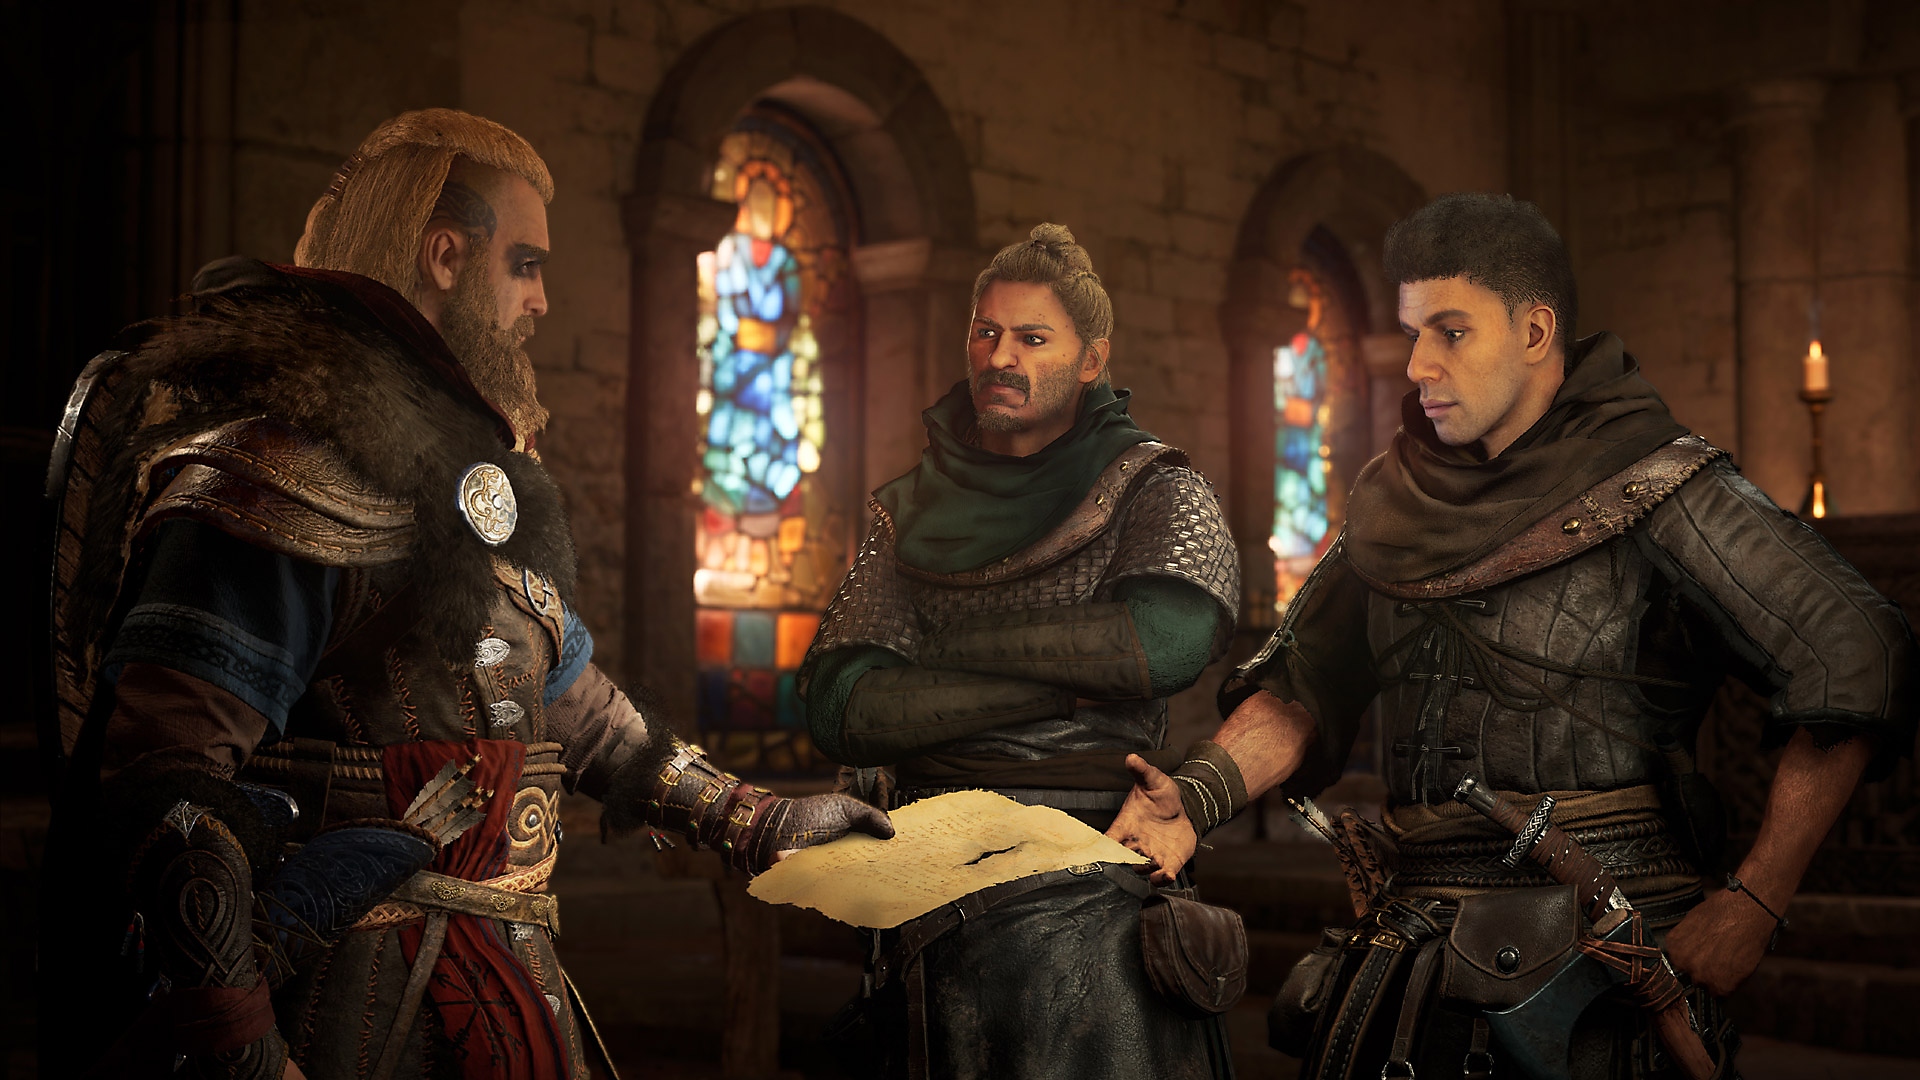 Assassin's Creed Valhalla 스크린샷, 스테인드 글라스의 창이 있는 교회에 서 있는 캐릭터들